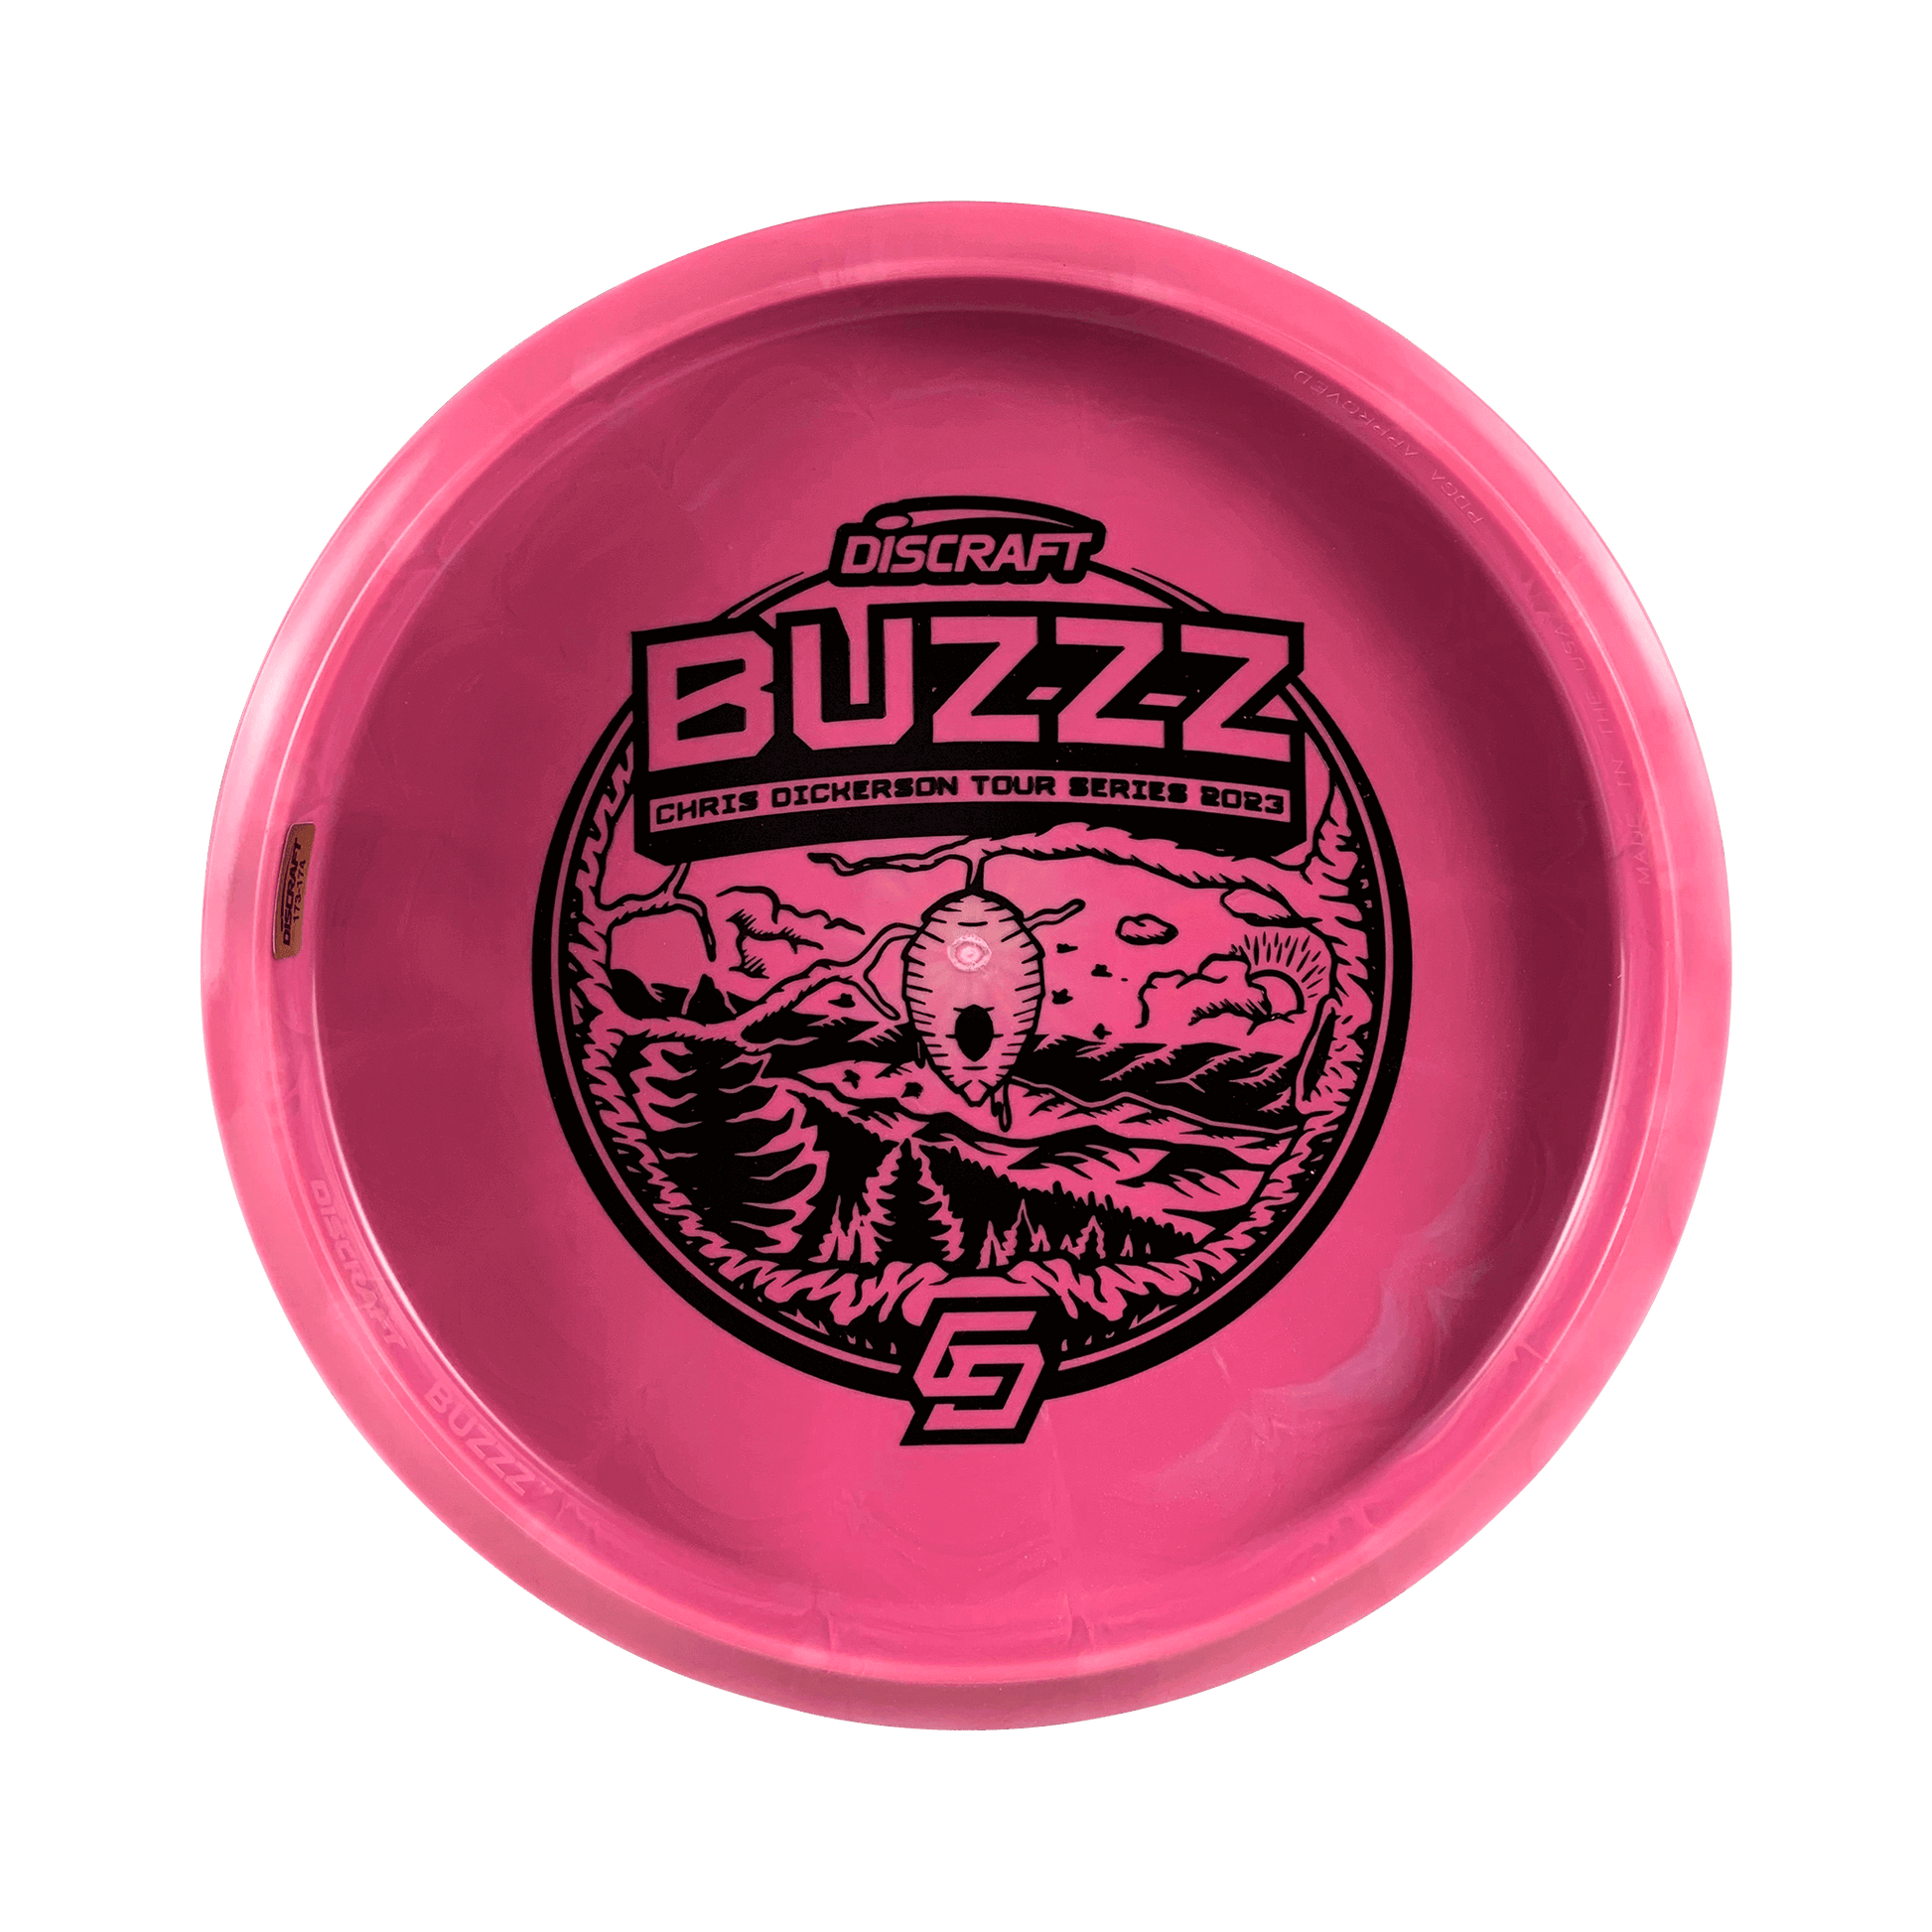 ESP Swirl Buzzz - Chris Dickerson Tour Series 2023 Disc Discraft pink 173 